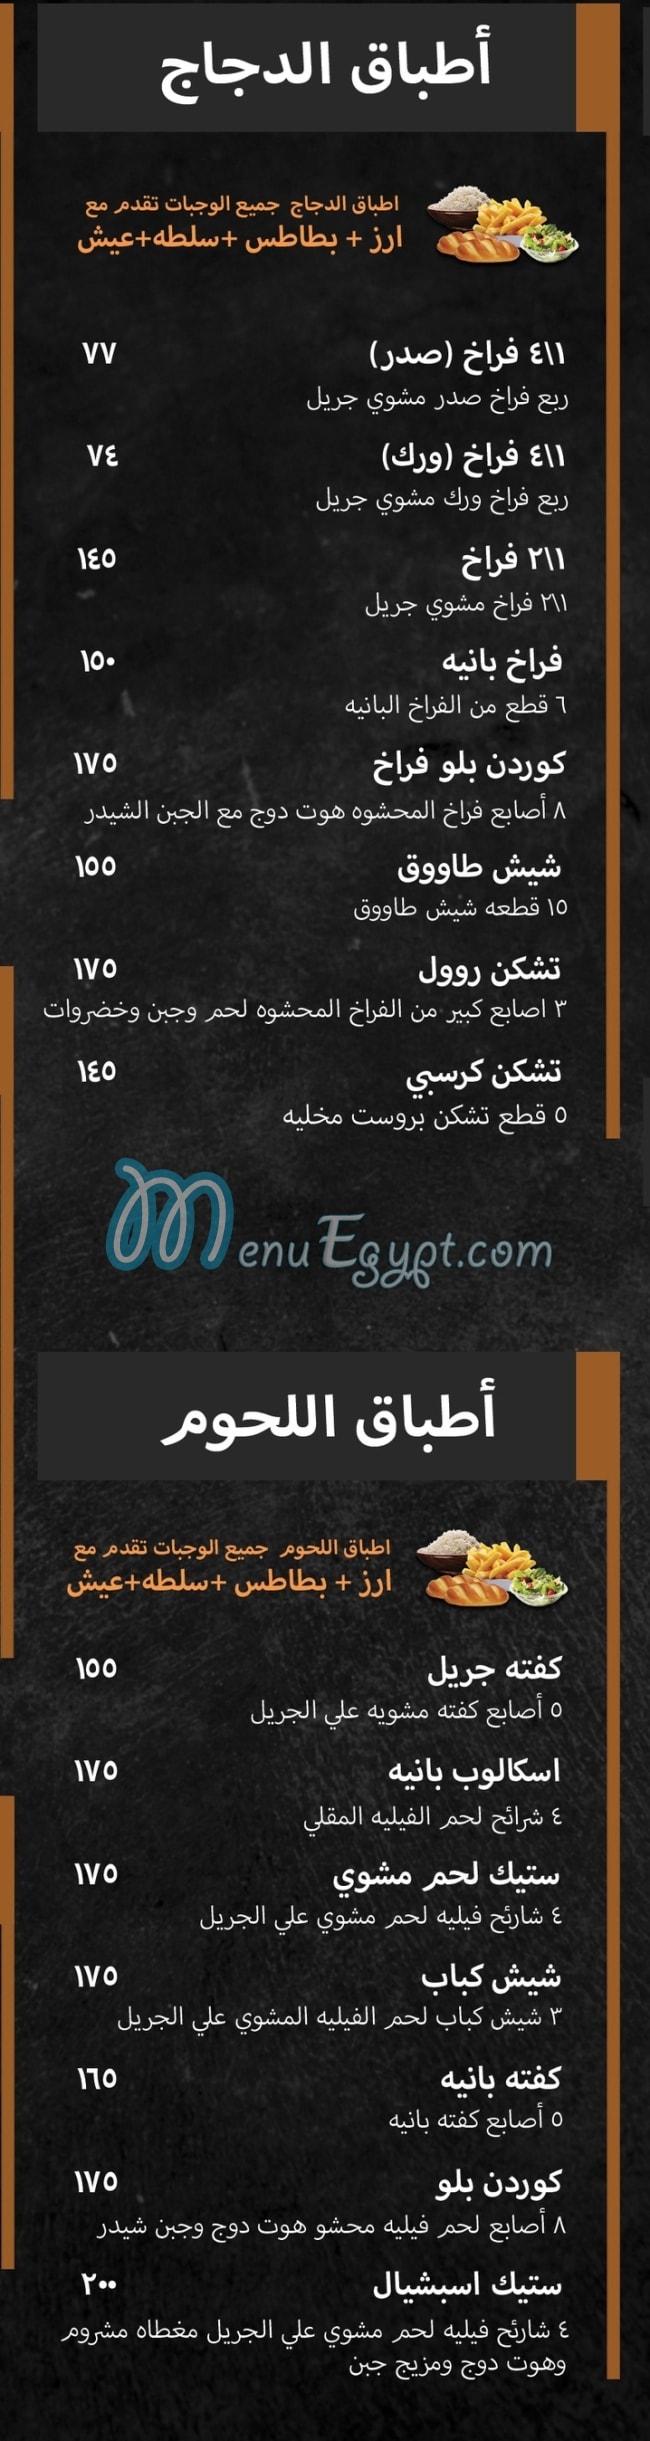 Onions menu Egypt 2